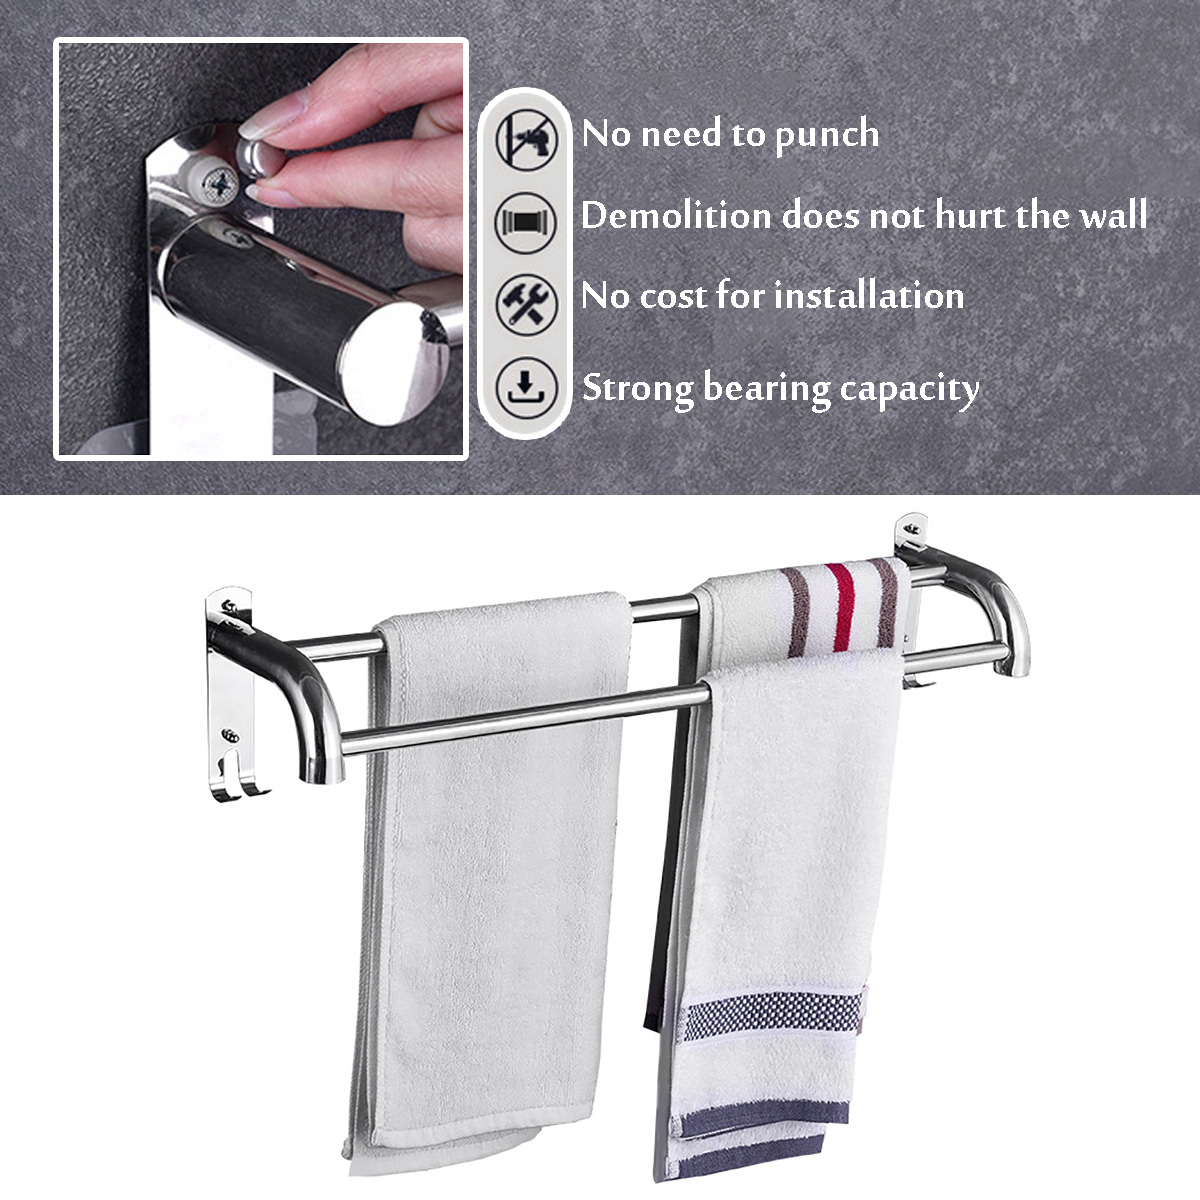 50cm-Stainless-Steel-Bath-Shelf-Wall-Mounted-Towel-Rail-Rack-Single-Double-Shelf-for-Bathroom-Storag-1838127-2